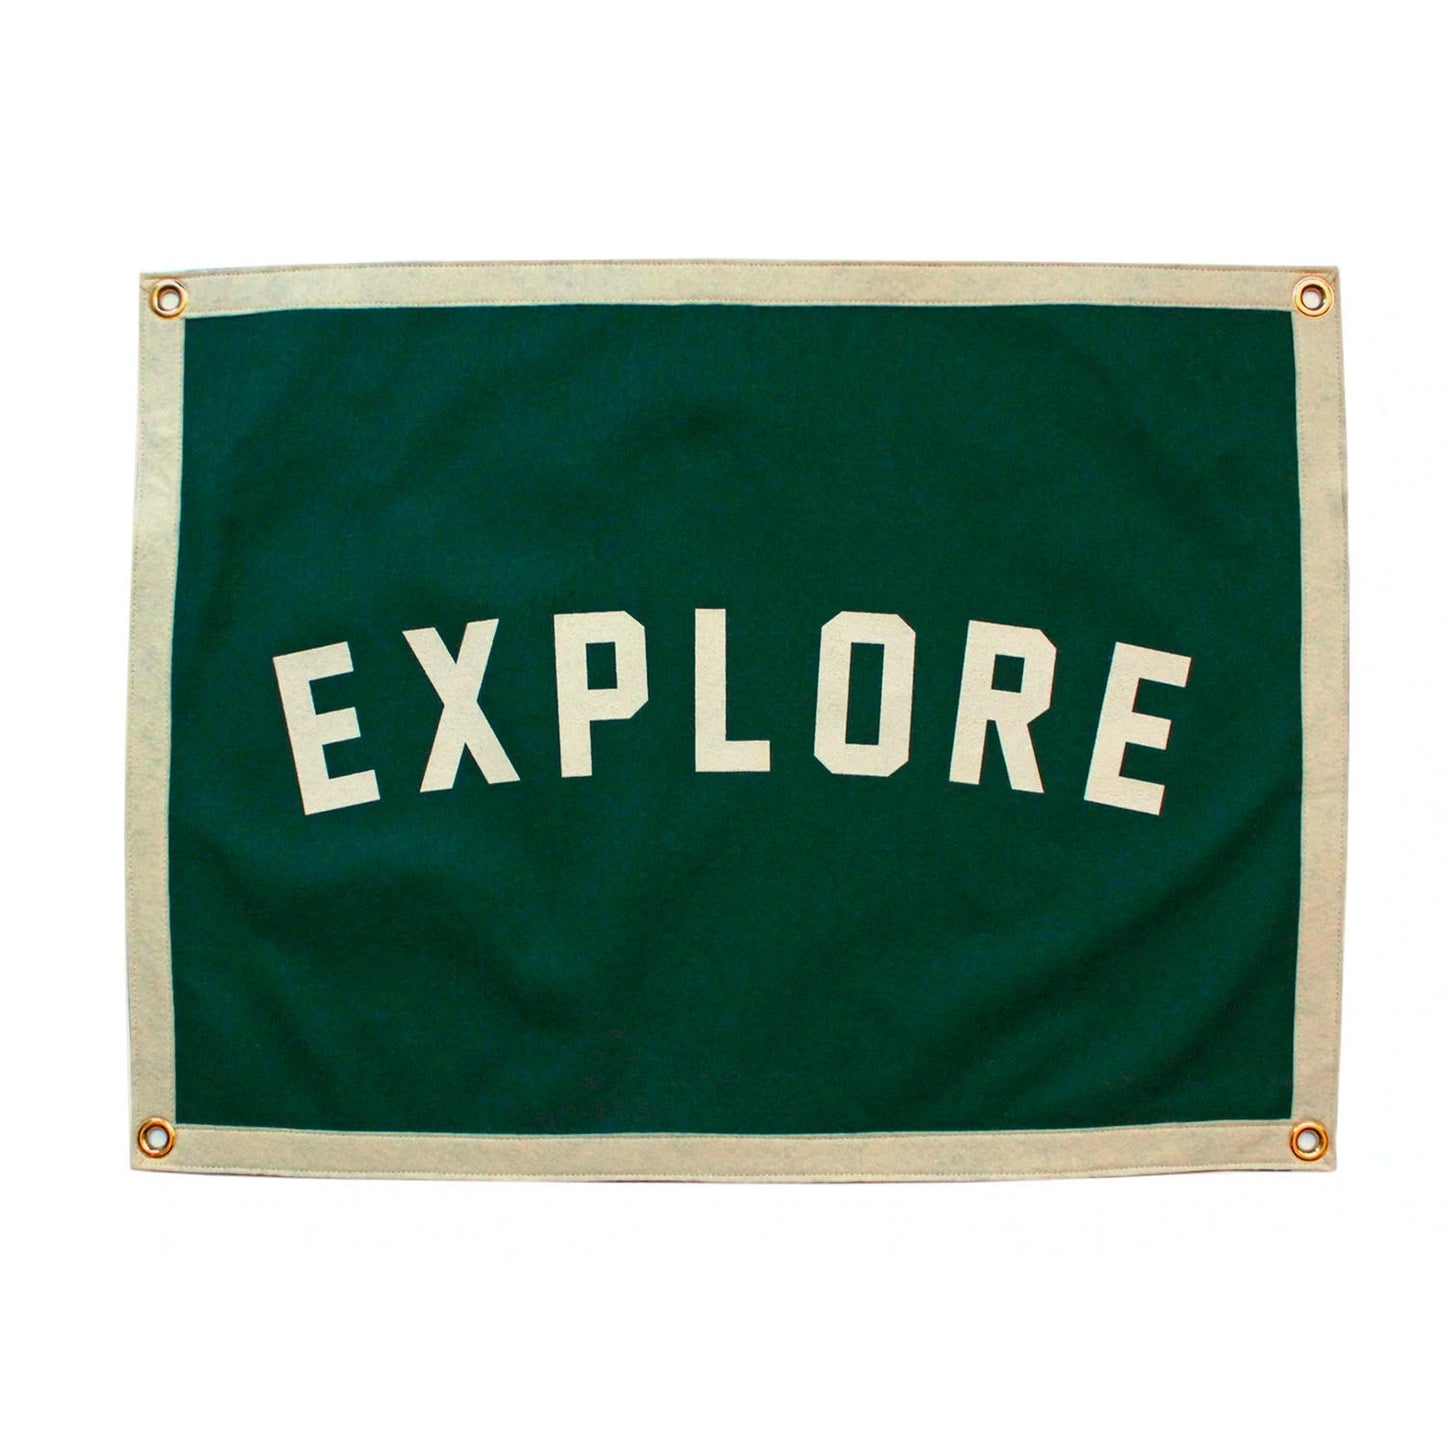 Explore. Camp Flag